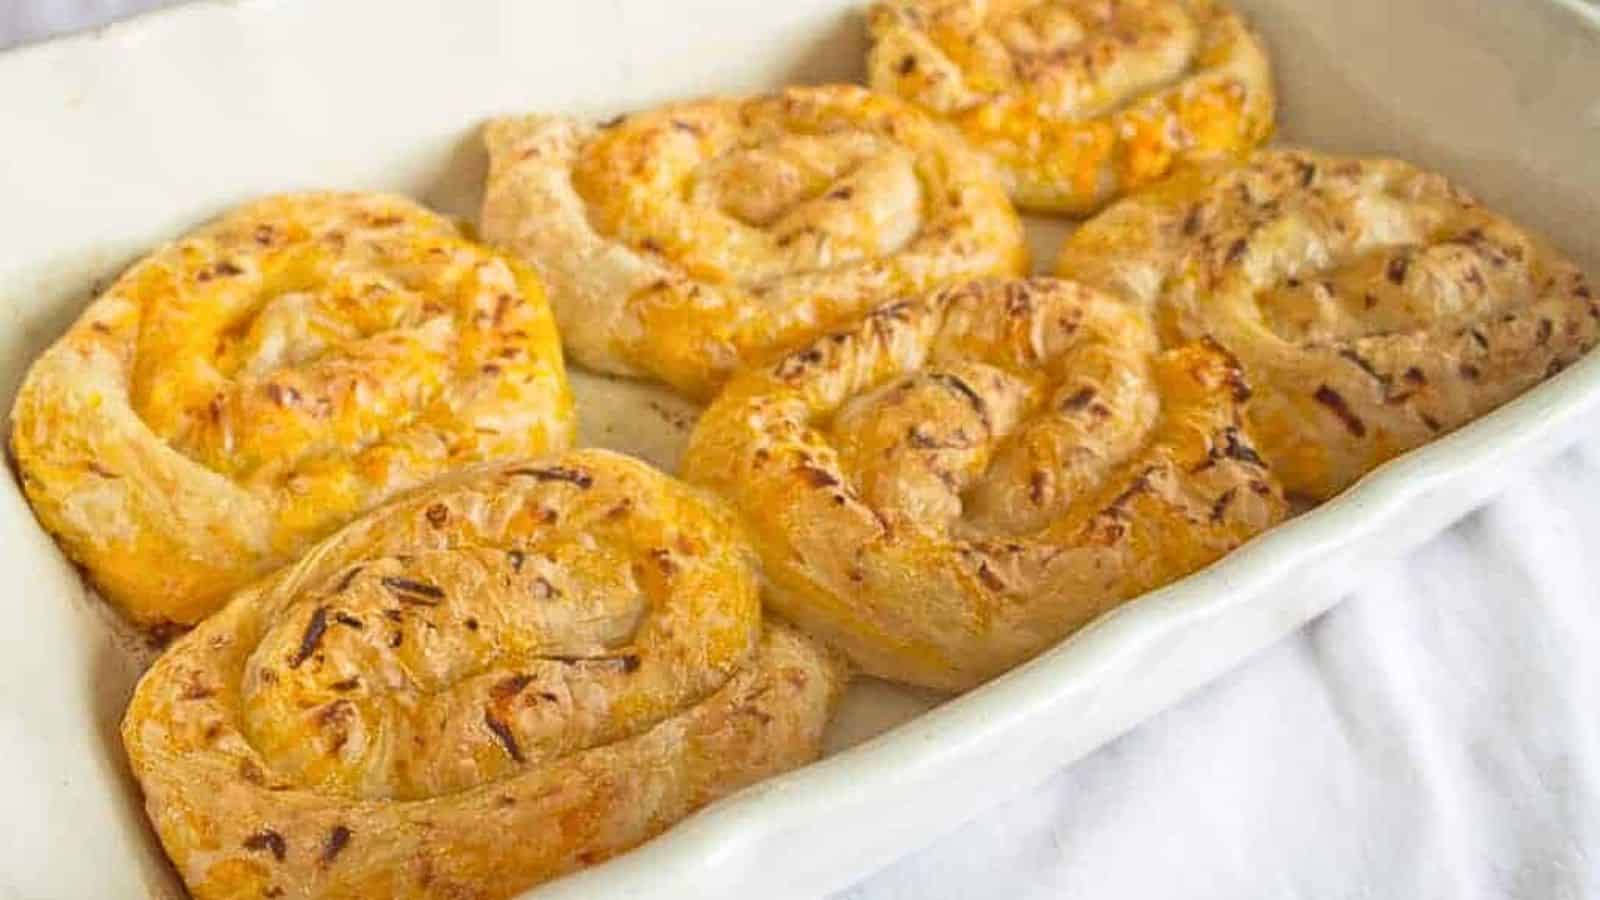 Cheesy cinnamon rolls in a white baking dish.